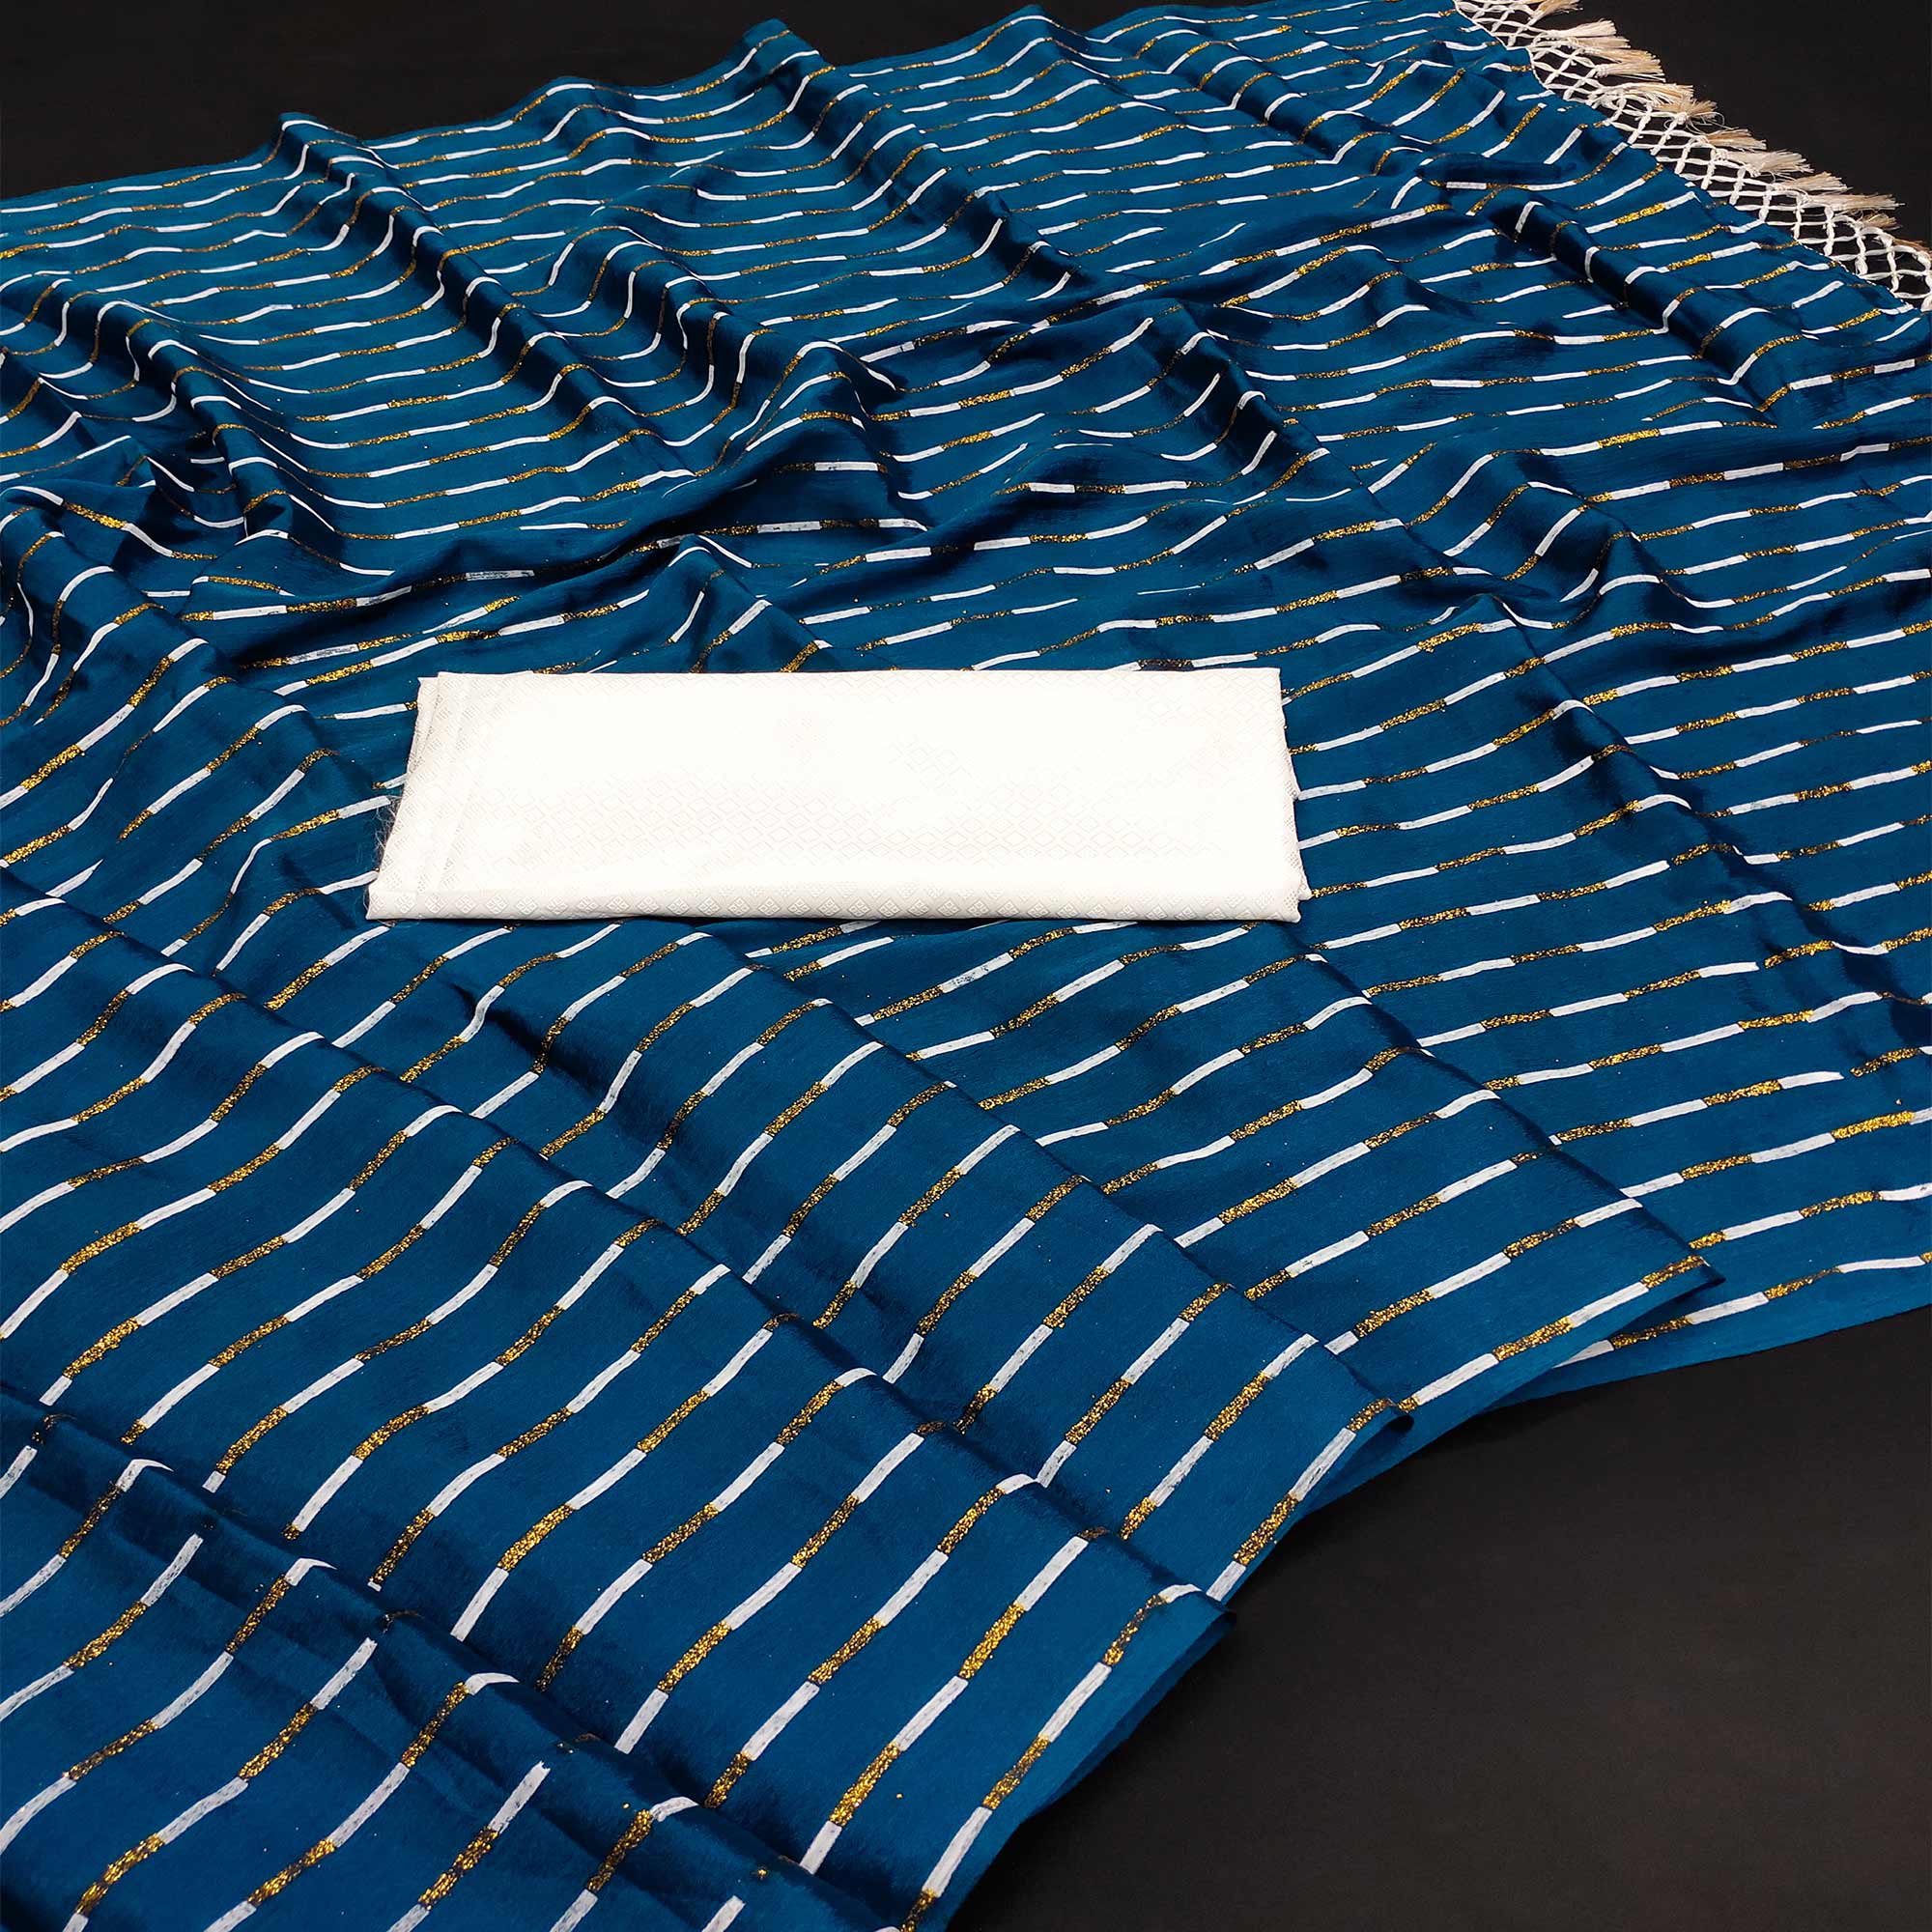 Teal Blue Printed Chiffon Saree With Tassels